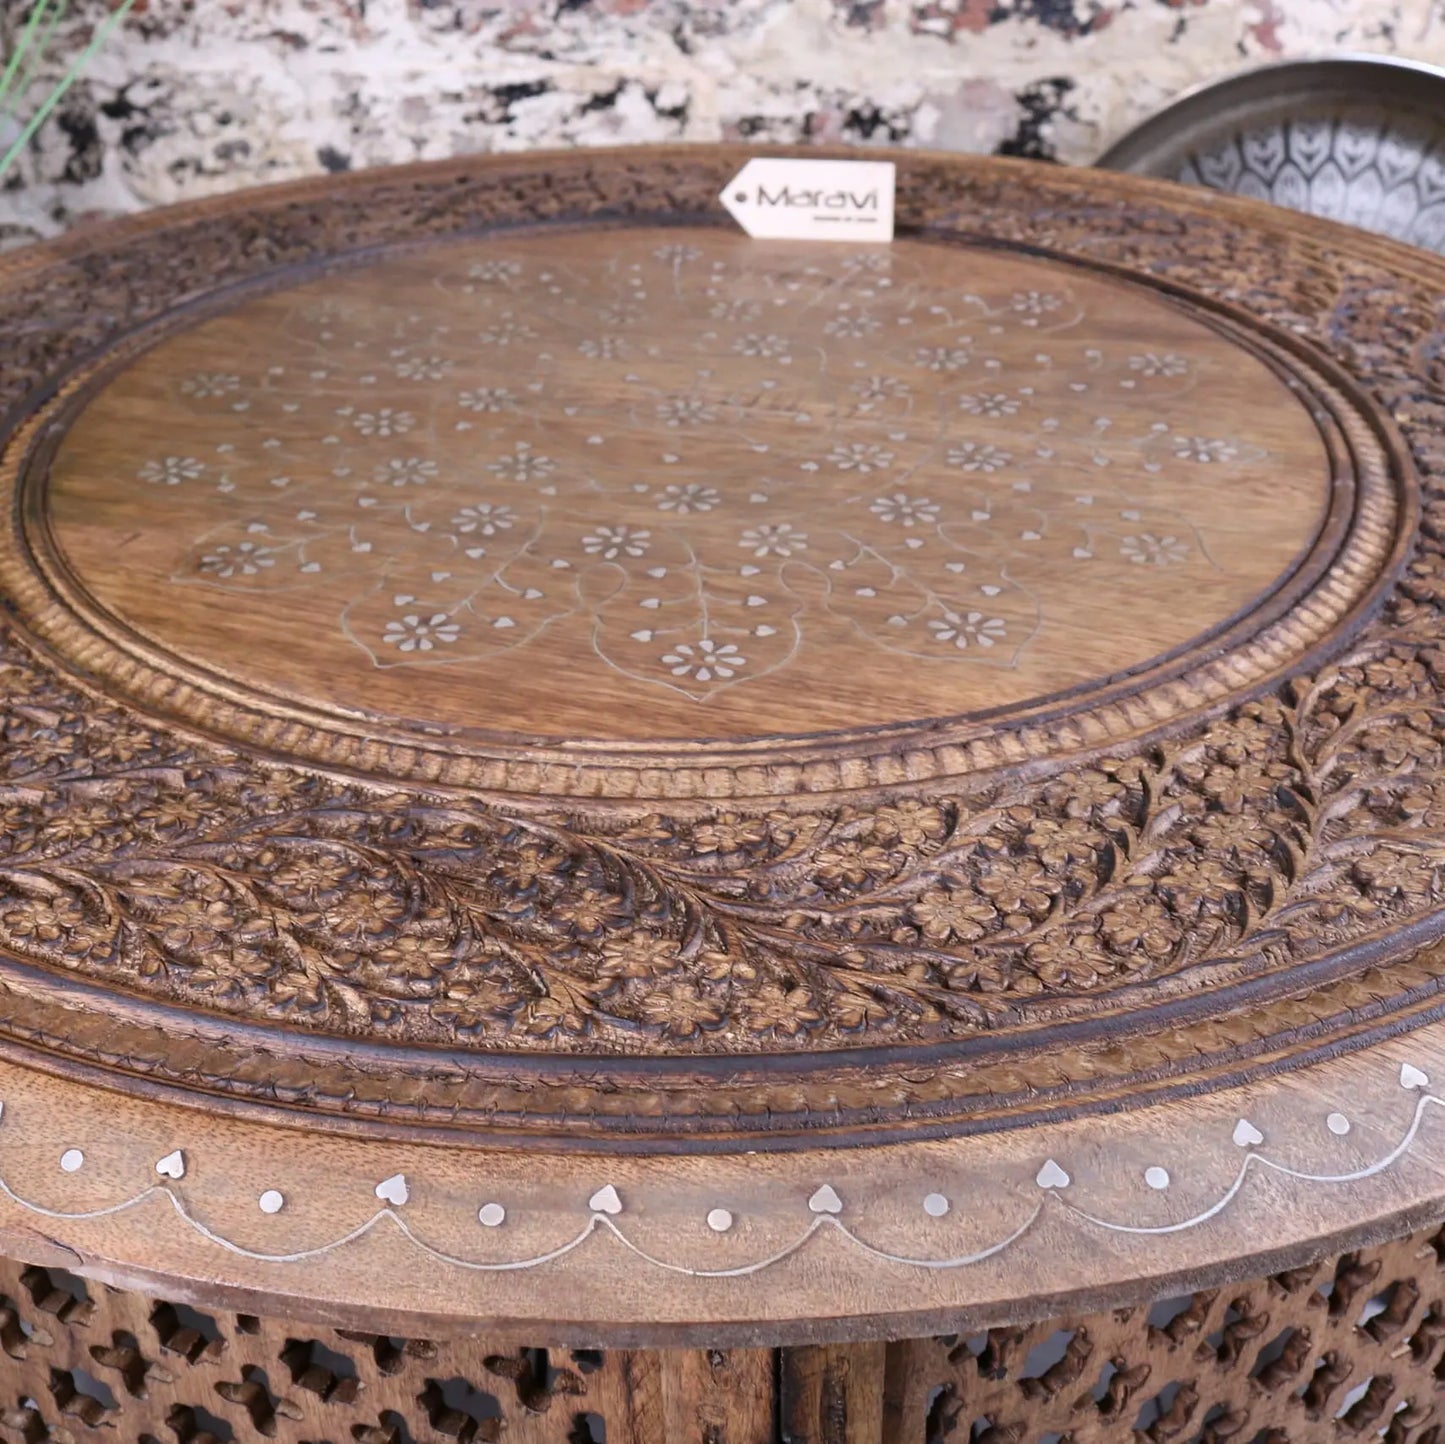 Matanga Round Wooden Coffee Table - Closeup of Table Edge